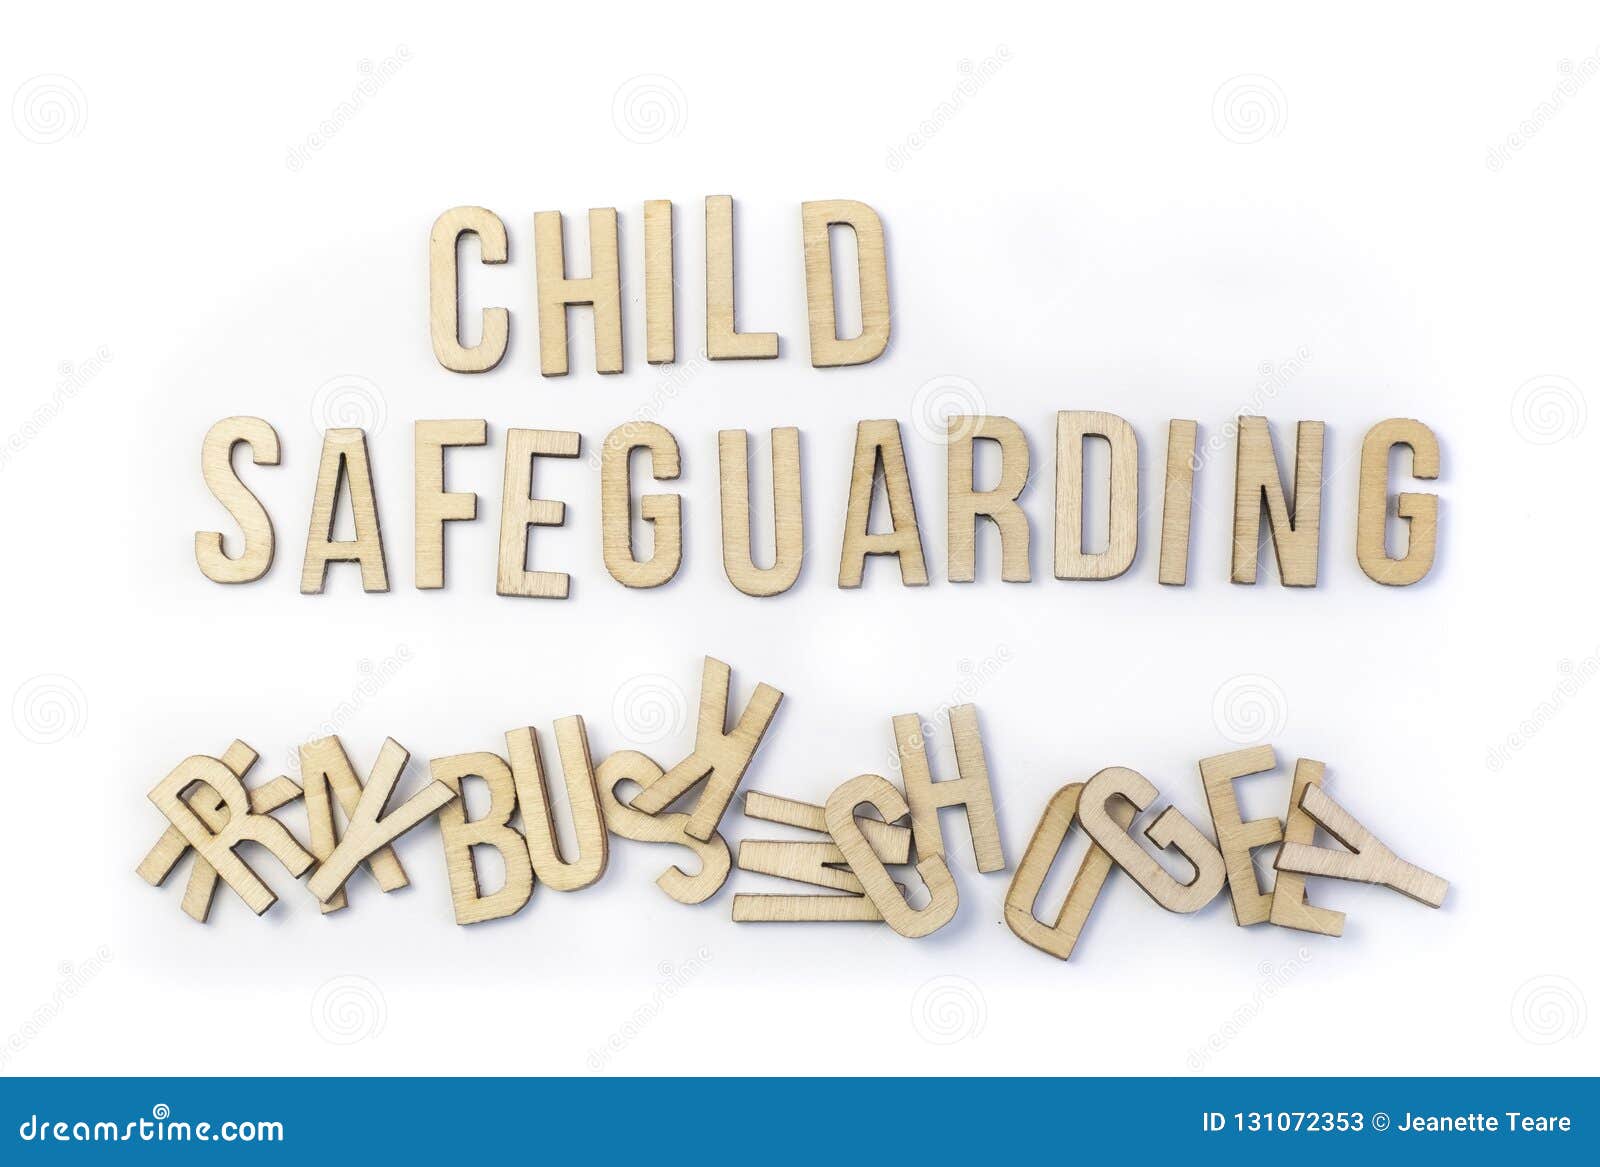 child safeguarding concept